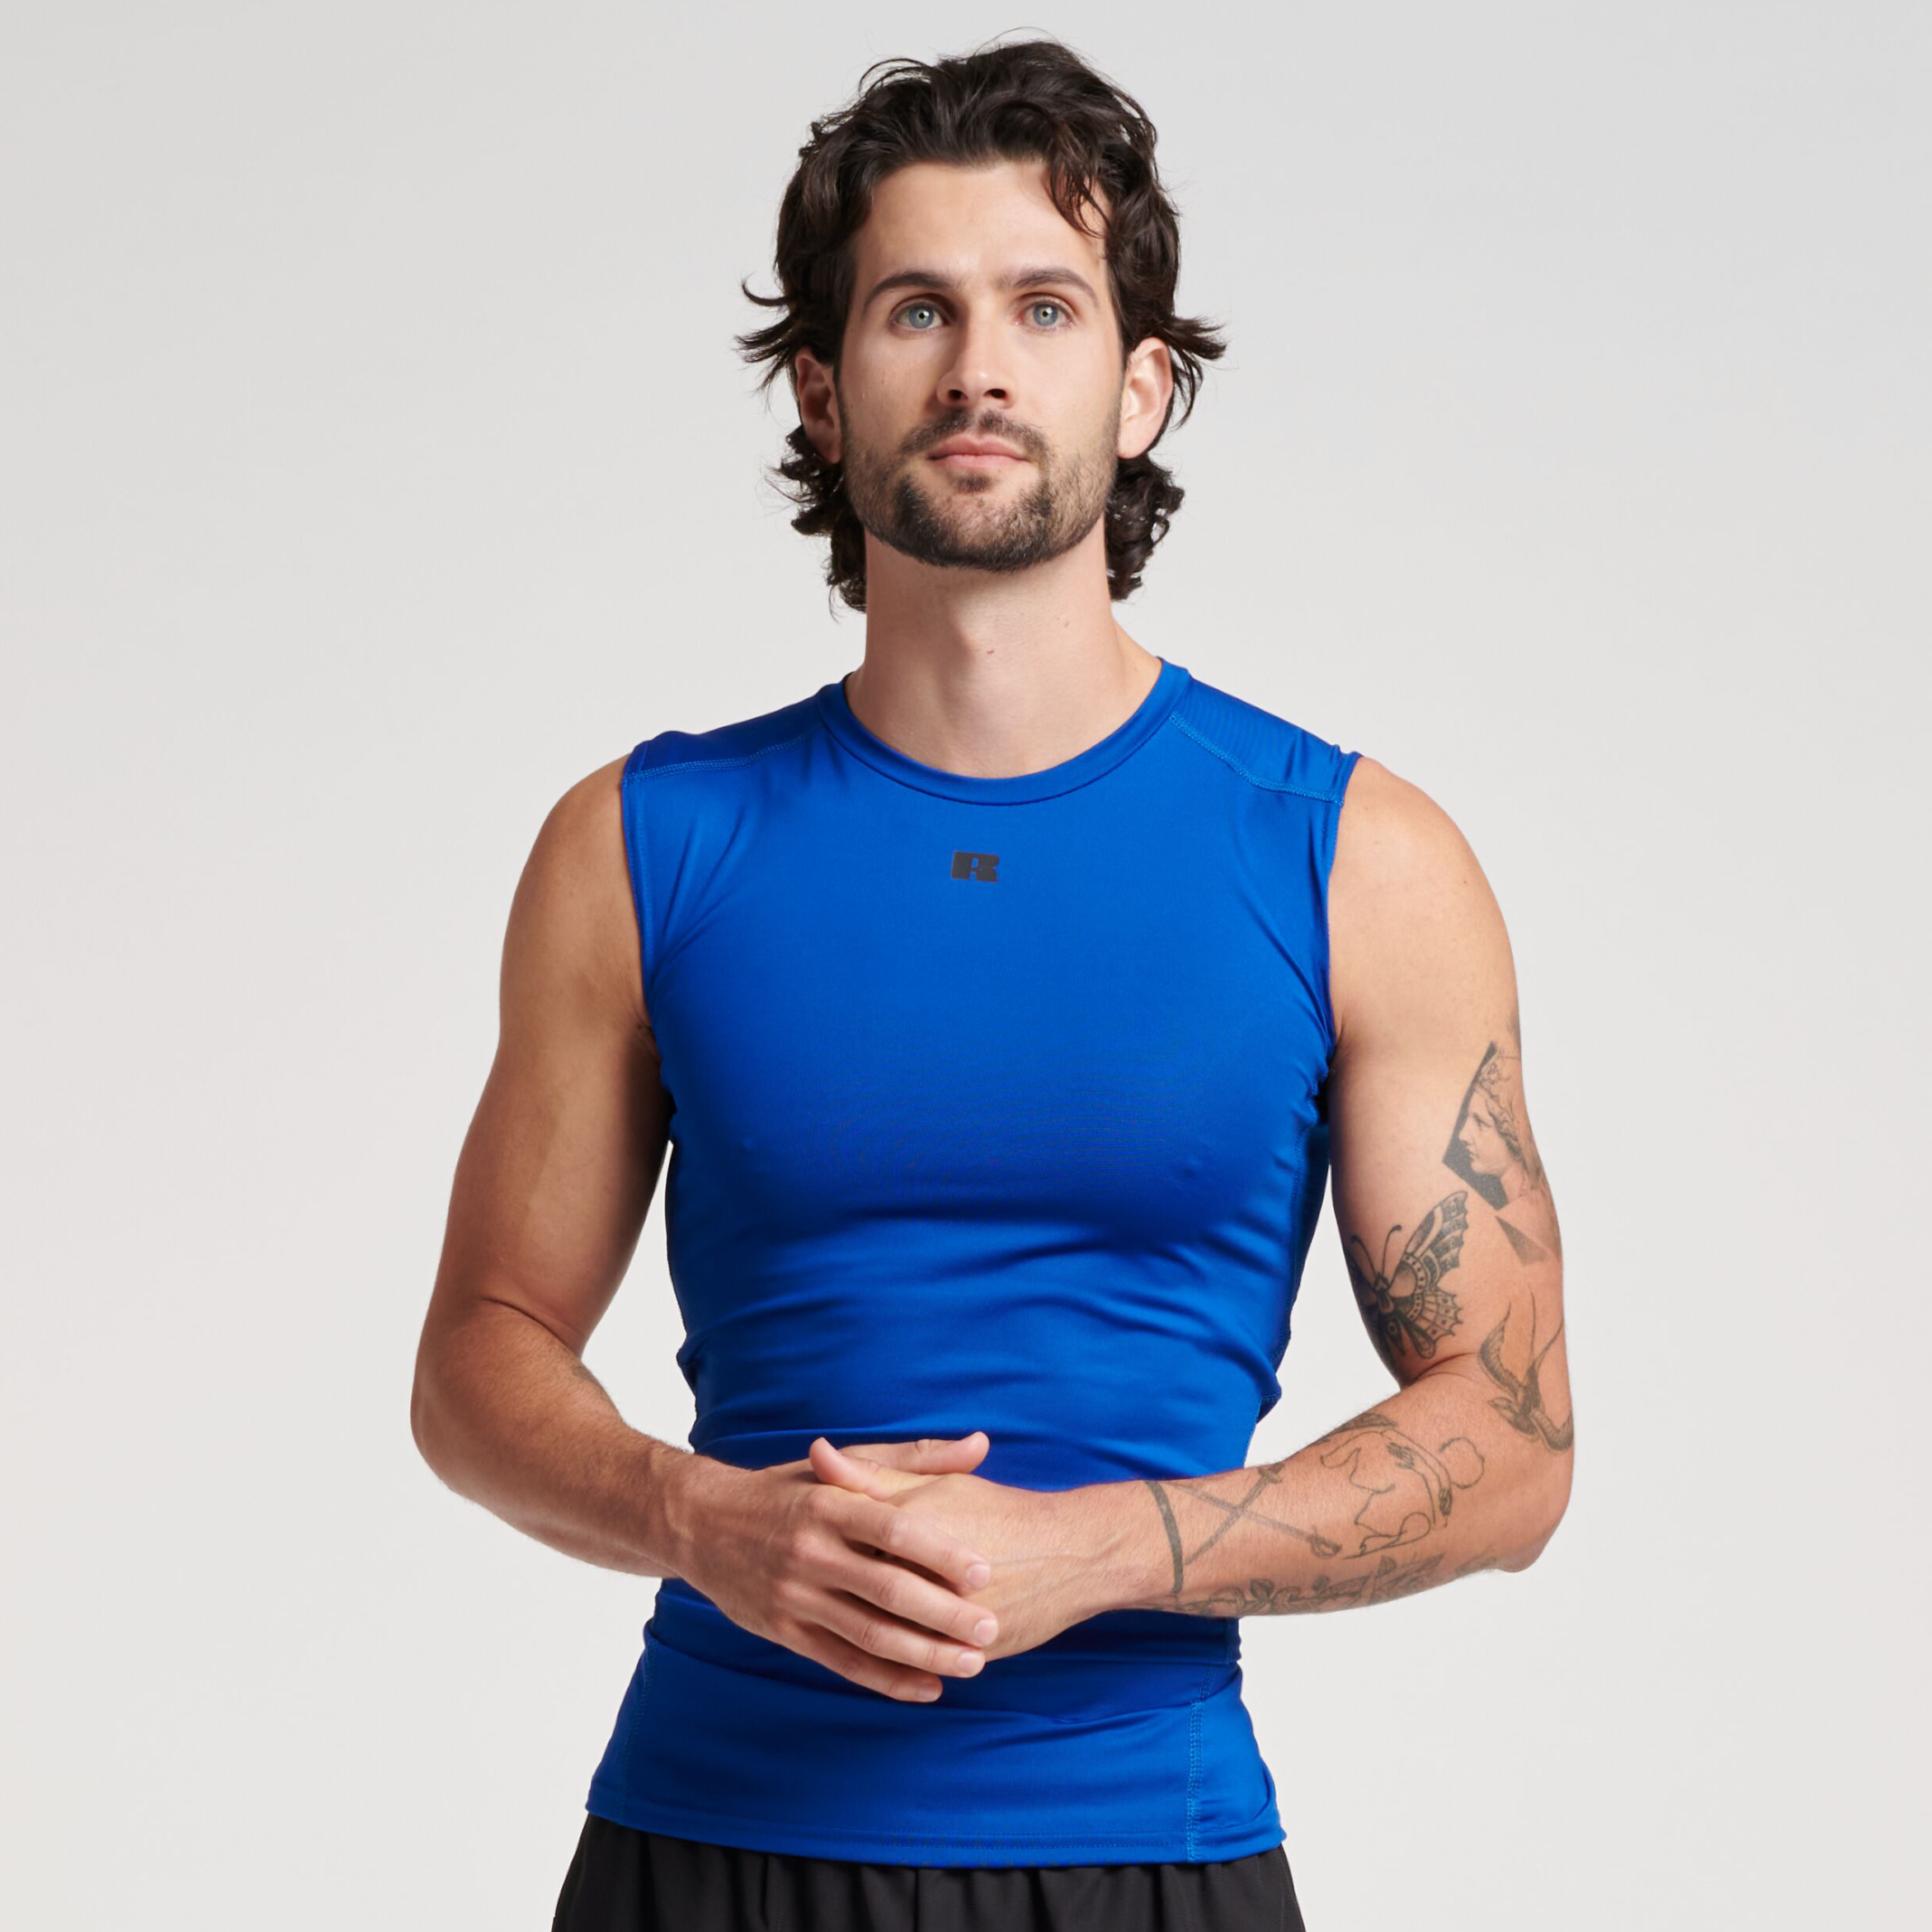 Men's Workout Clothes: Athletic Wear & Sportswear for Men